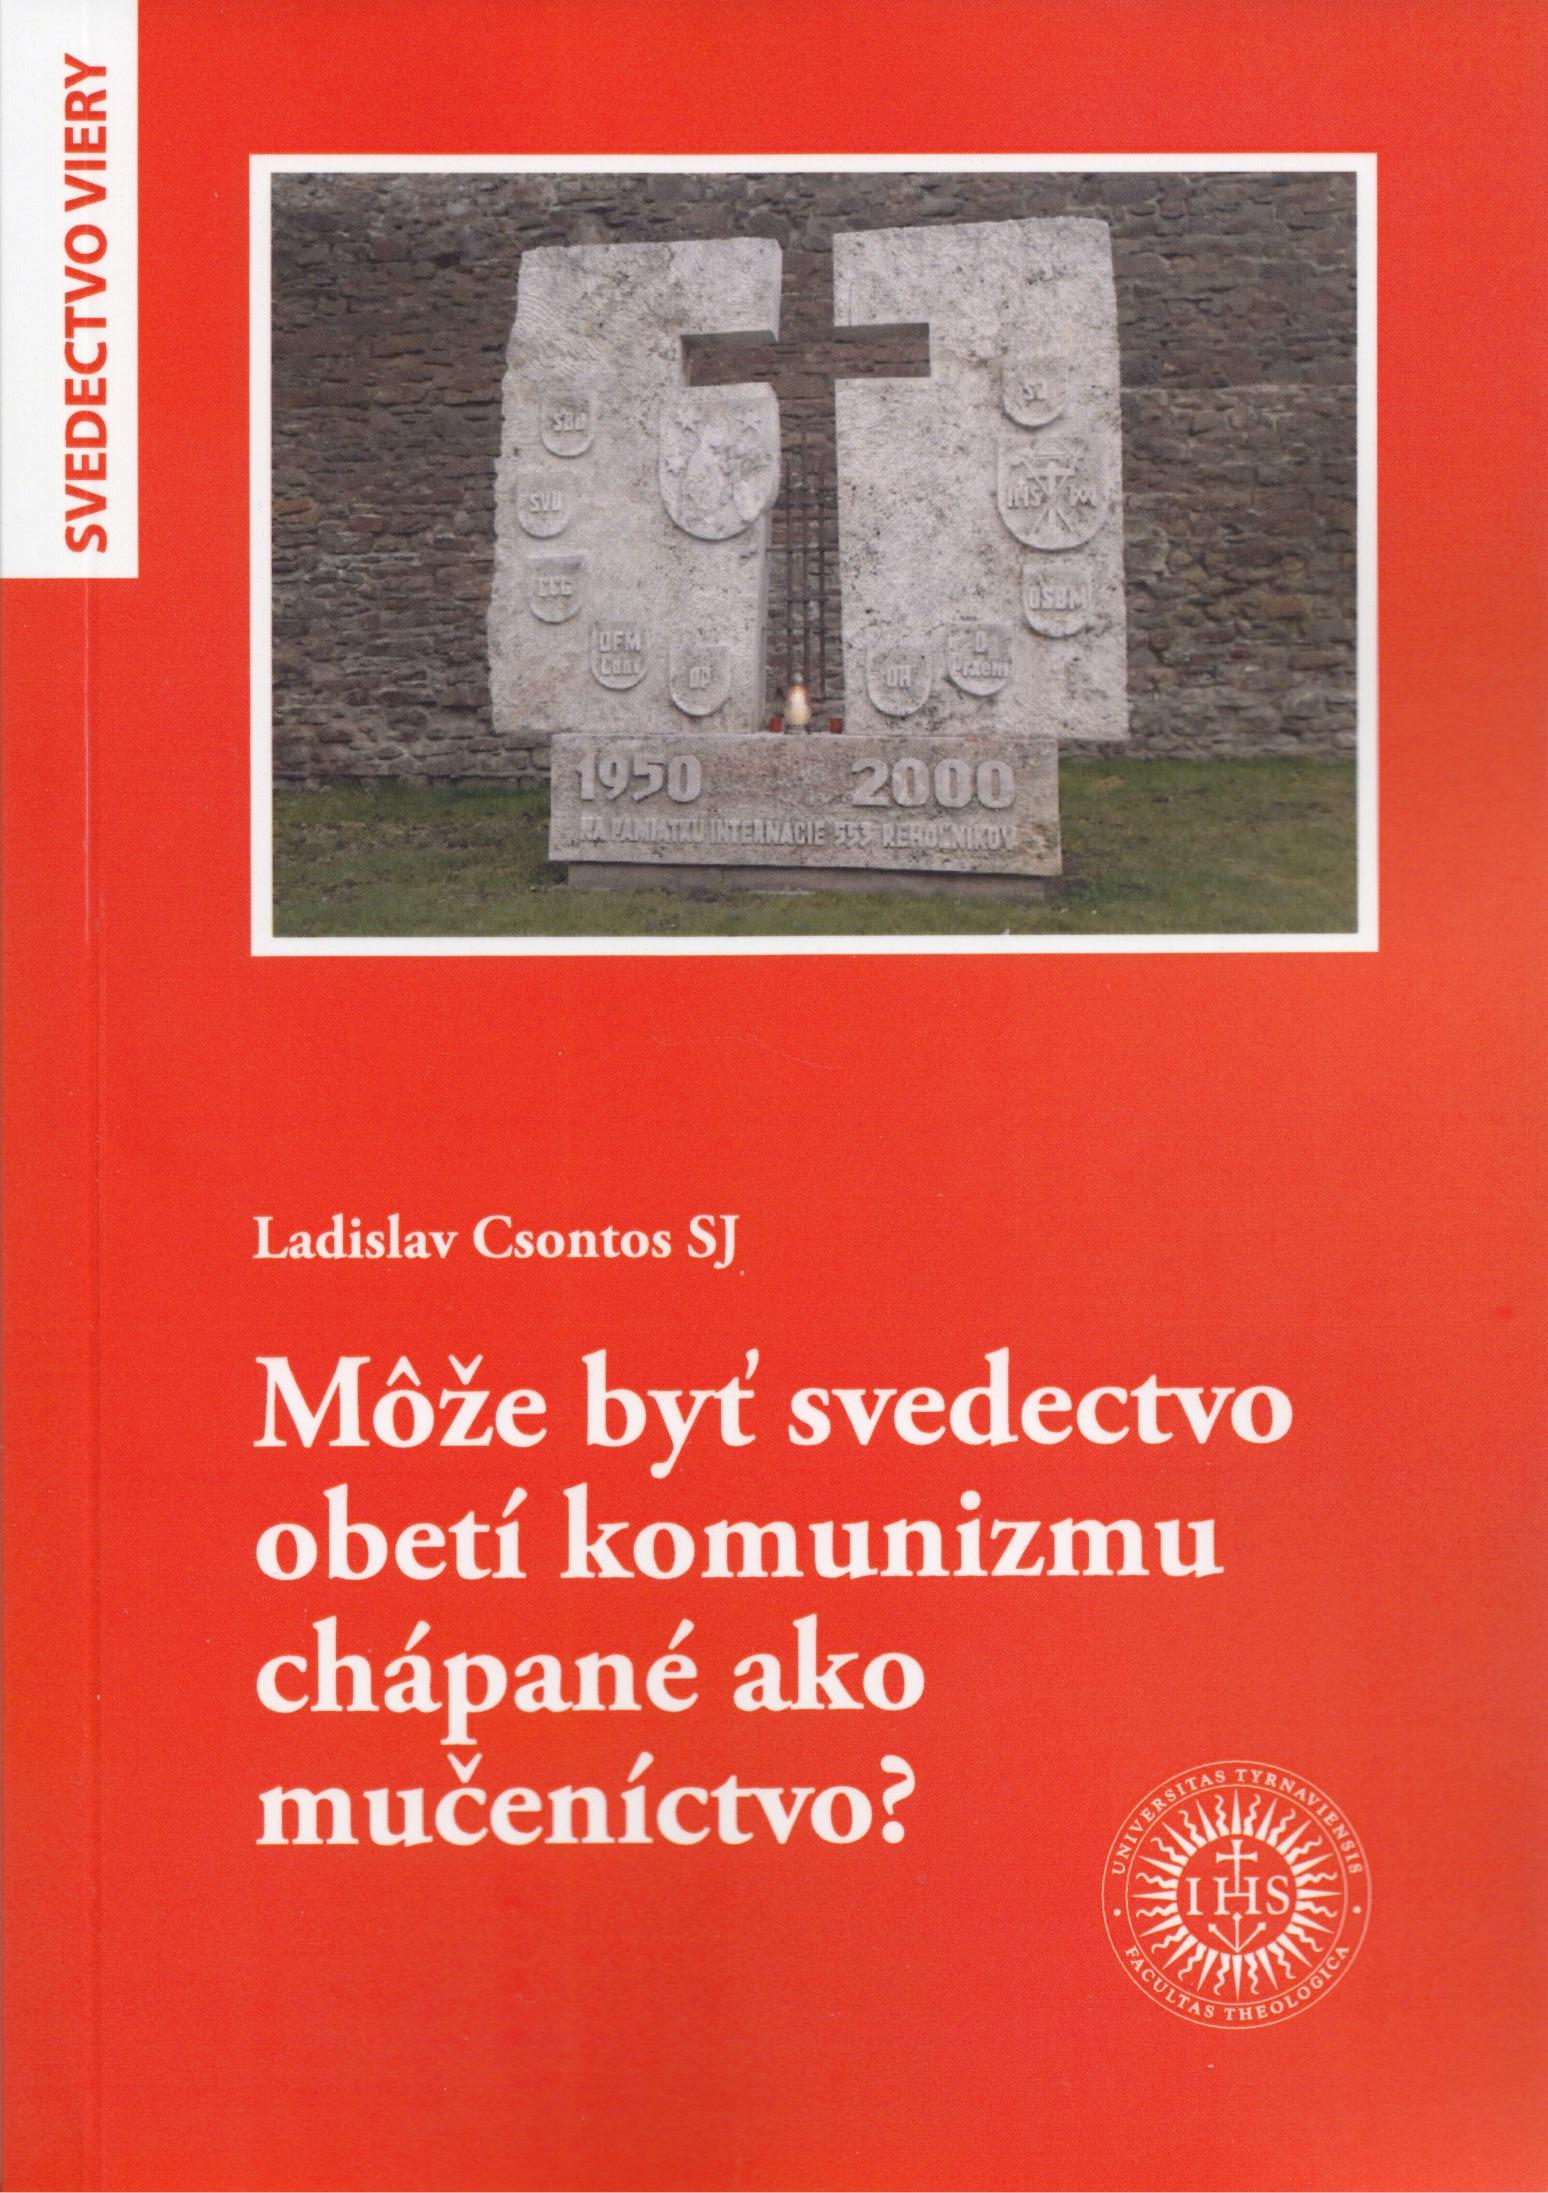 Ladislav, Csontos, kniha, mucenici, komunizmus, titulka